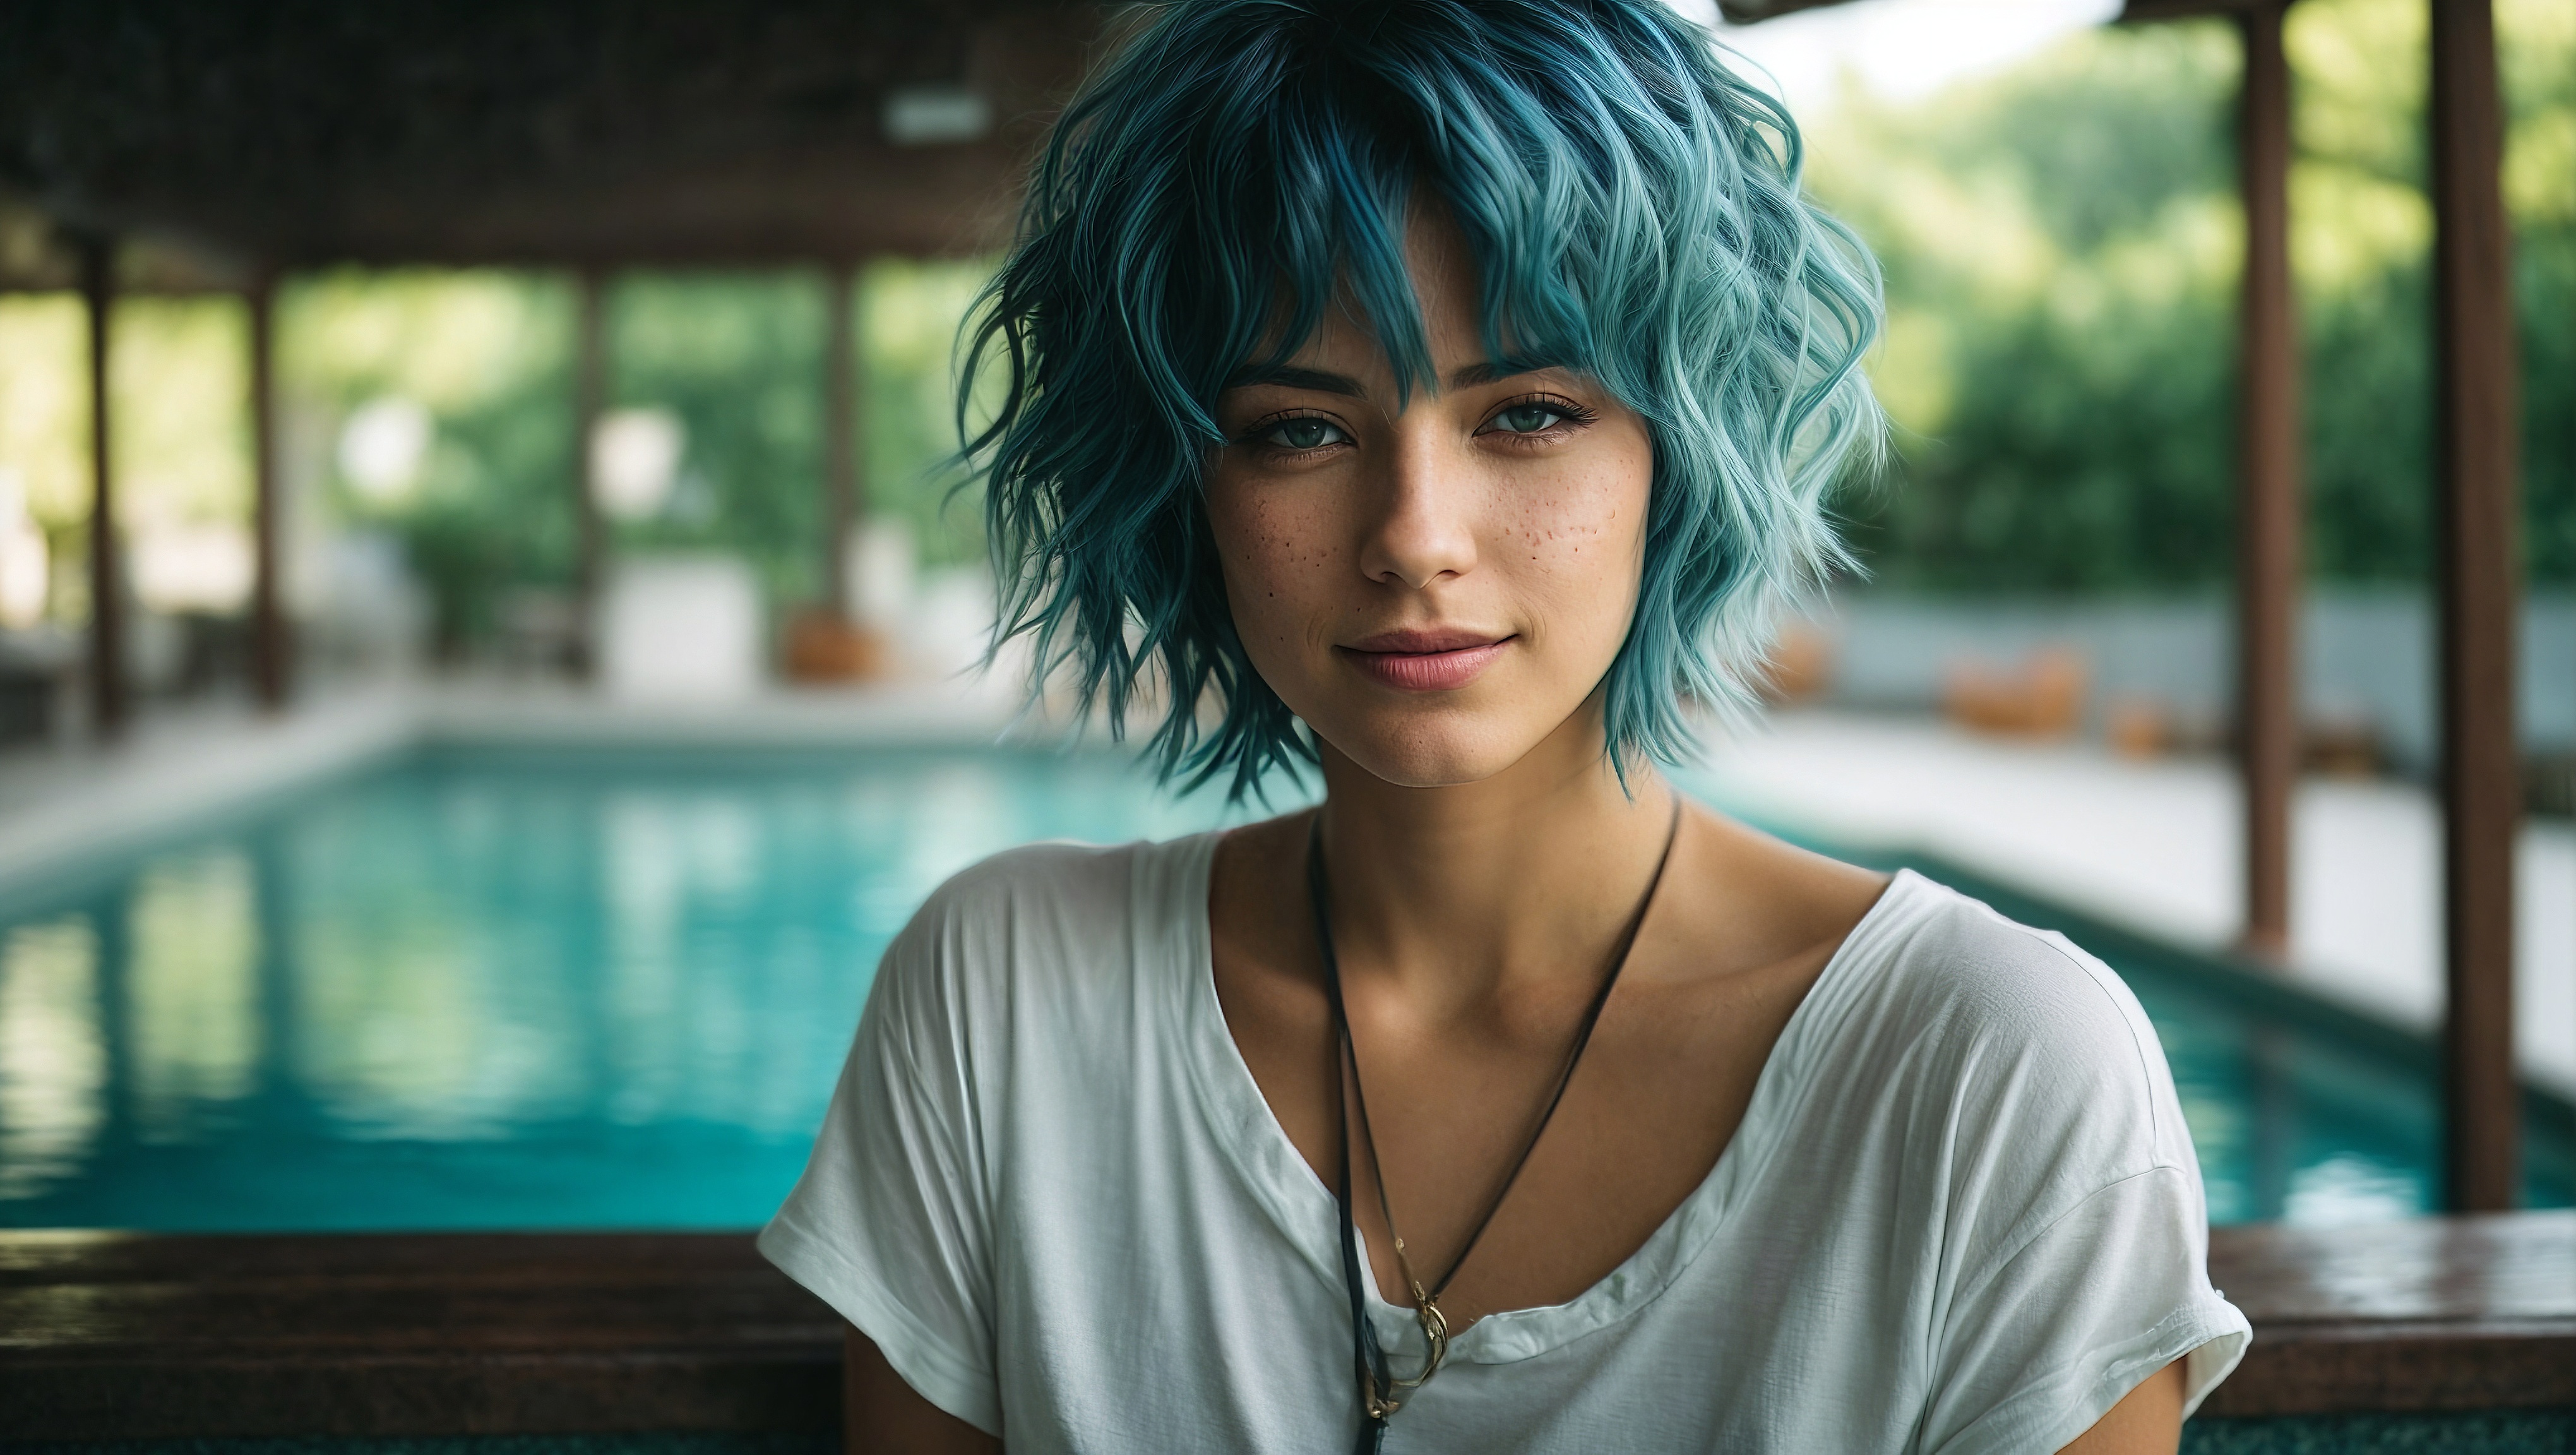 Free photo A woman with blue hair near a pool